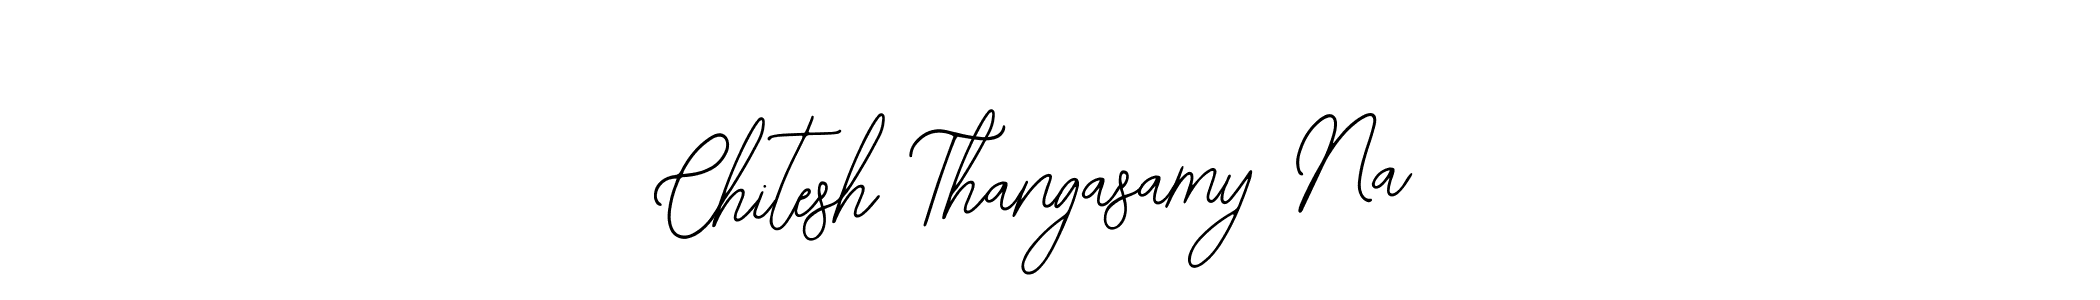 How to Draw Chitesh Thangasamy Na signature style? Bearetta-2O07w is a latest design signature styles for name Chitesh Thangasamy Na. Chitesh Thangasamy Na signature style 12 images and pictures png